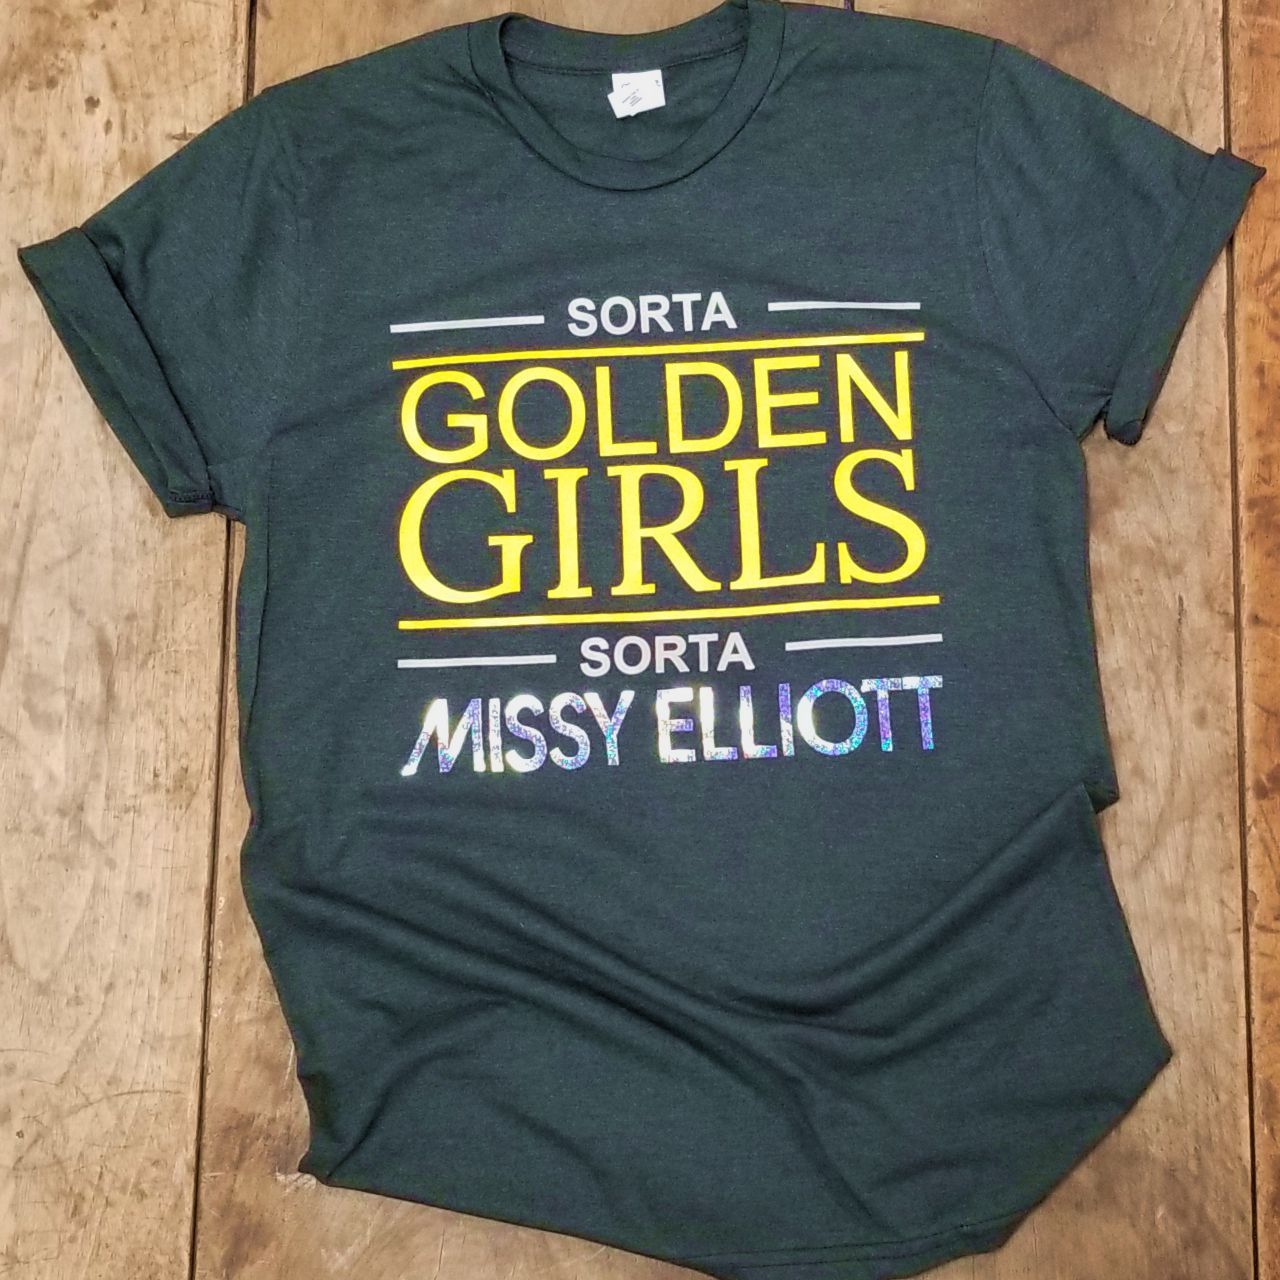 Sorta Golden Girls Sorta Missy Elliott - Space Black Tee - The Graphic Tee